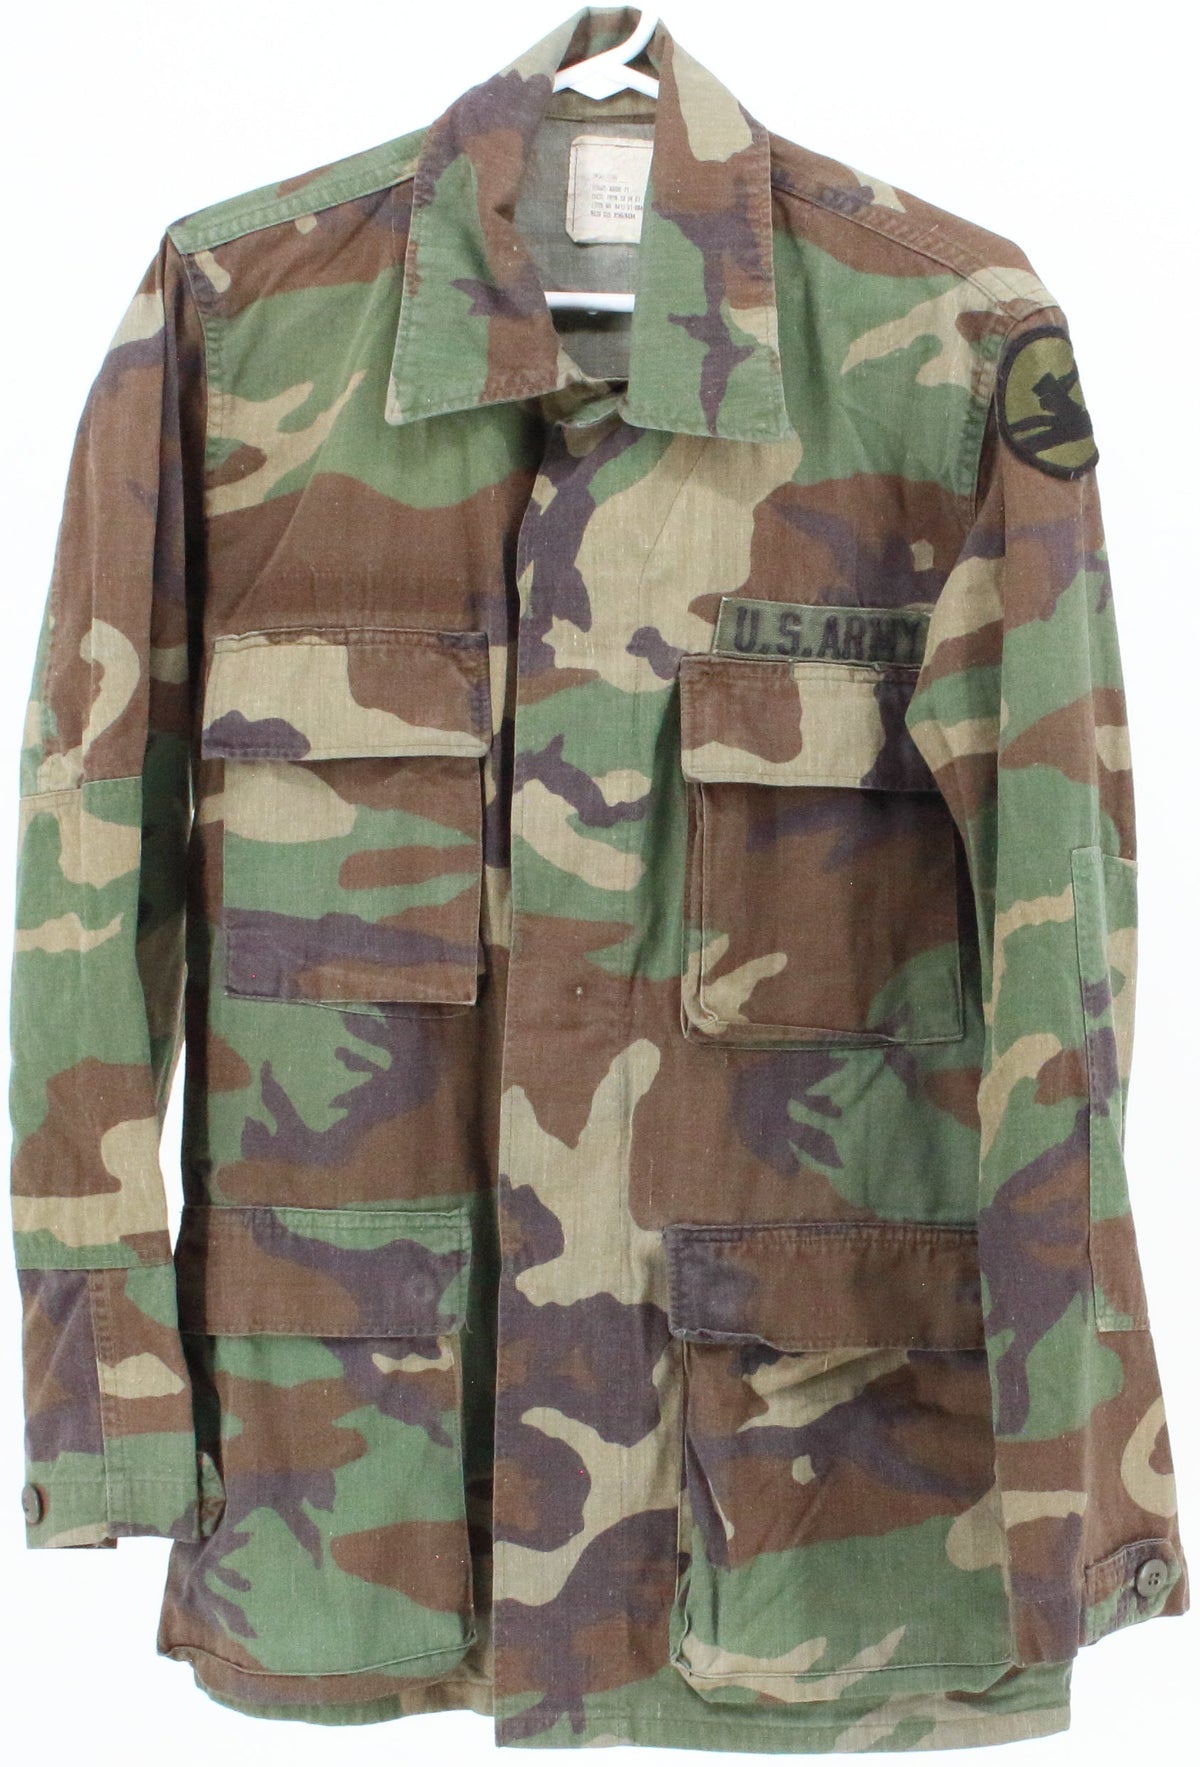 Selma Apparel Corp. U.S. Army Green Woodland Camo Pattern Shirt